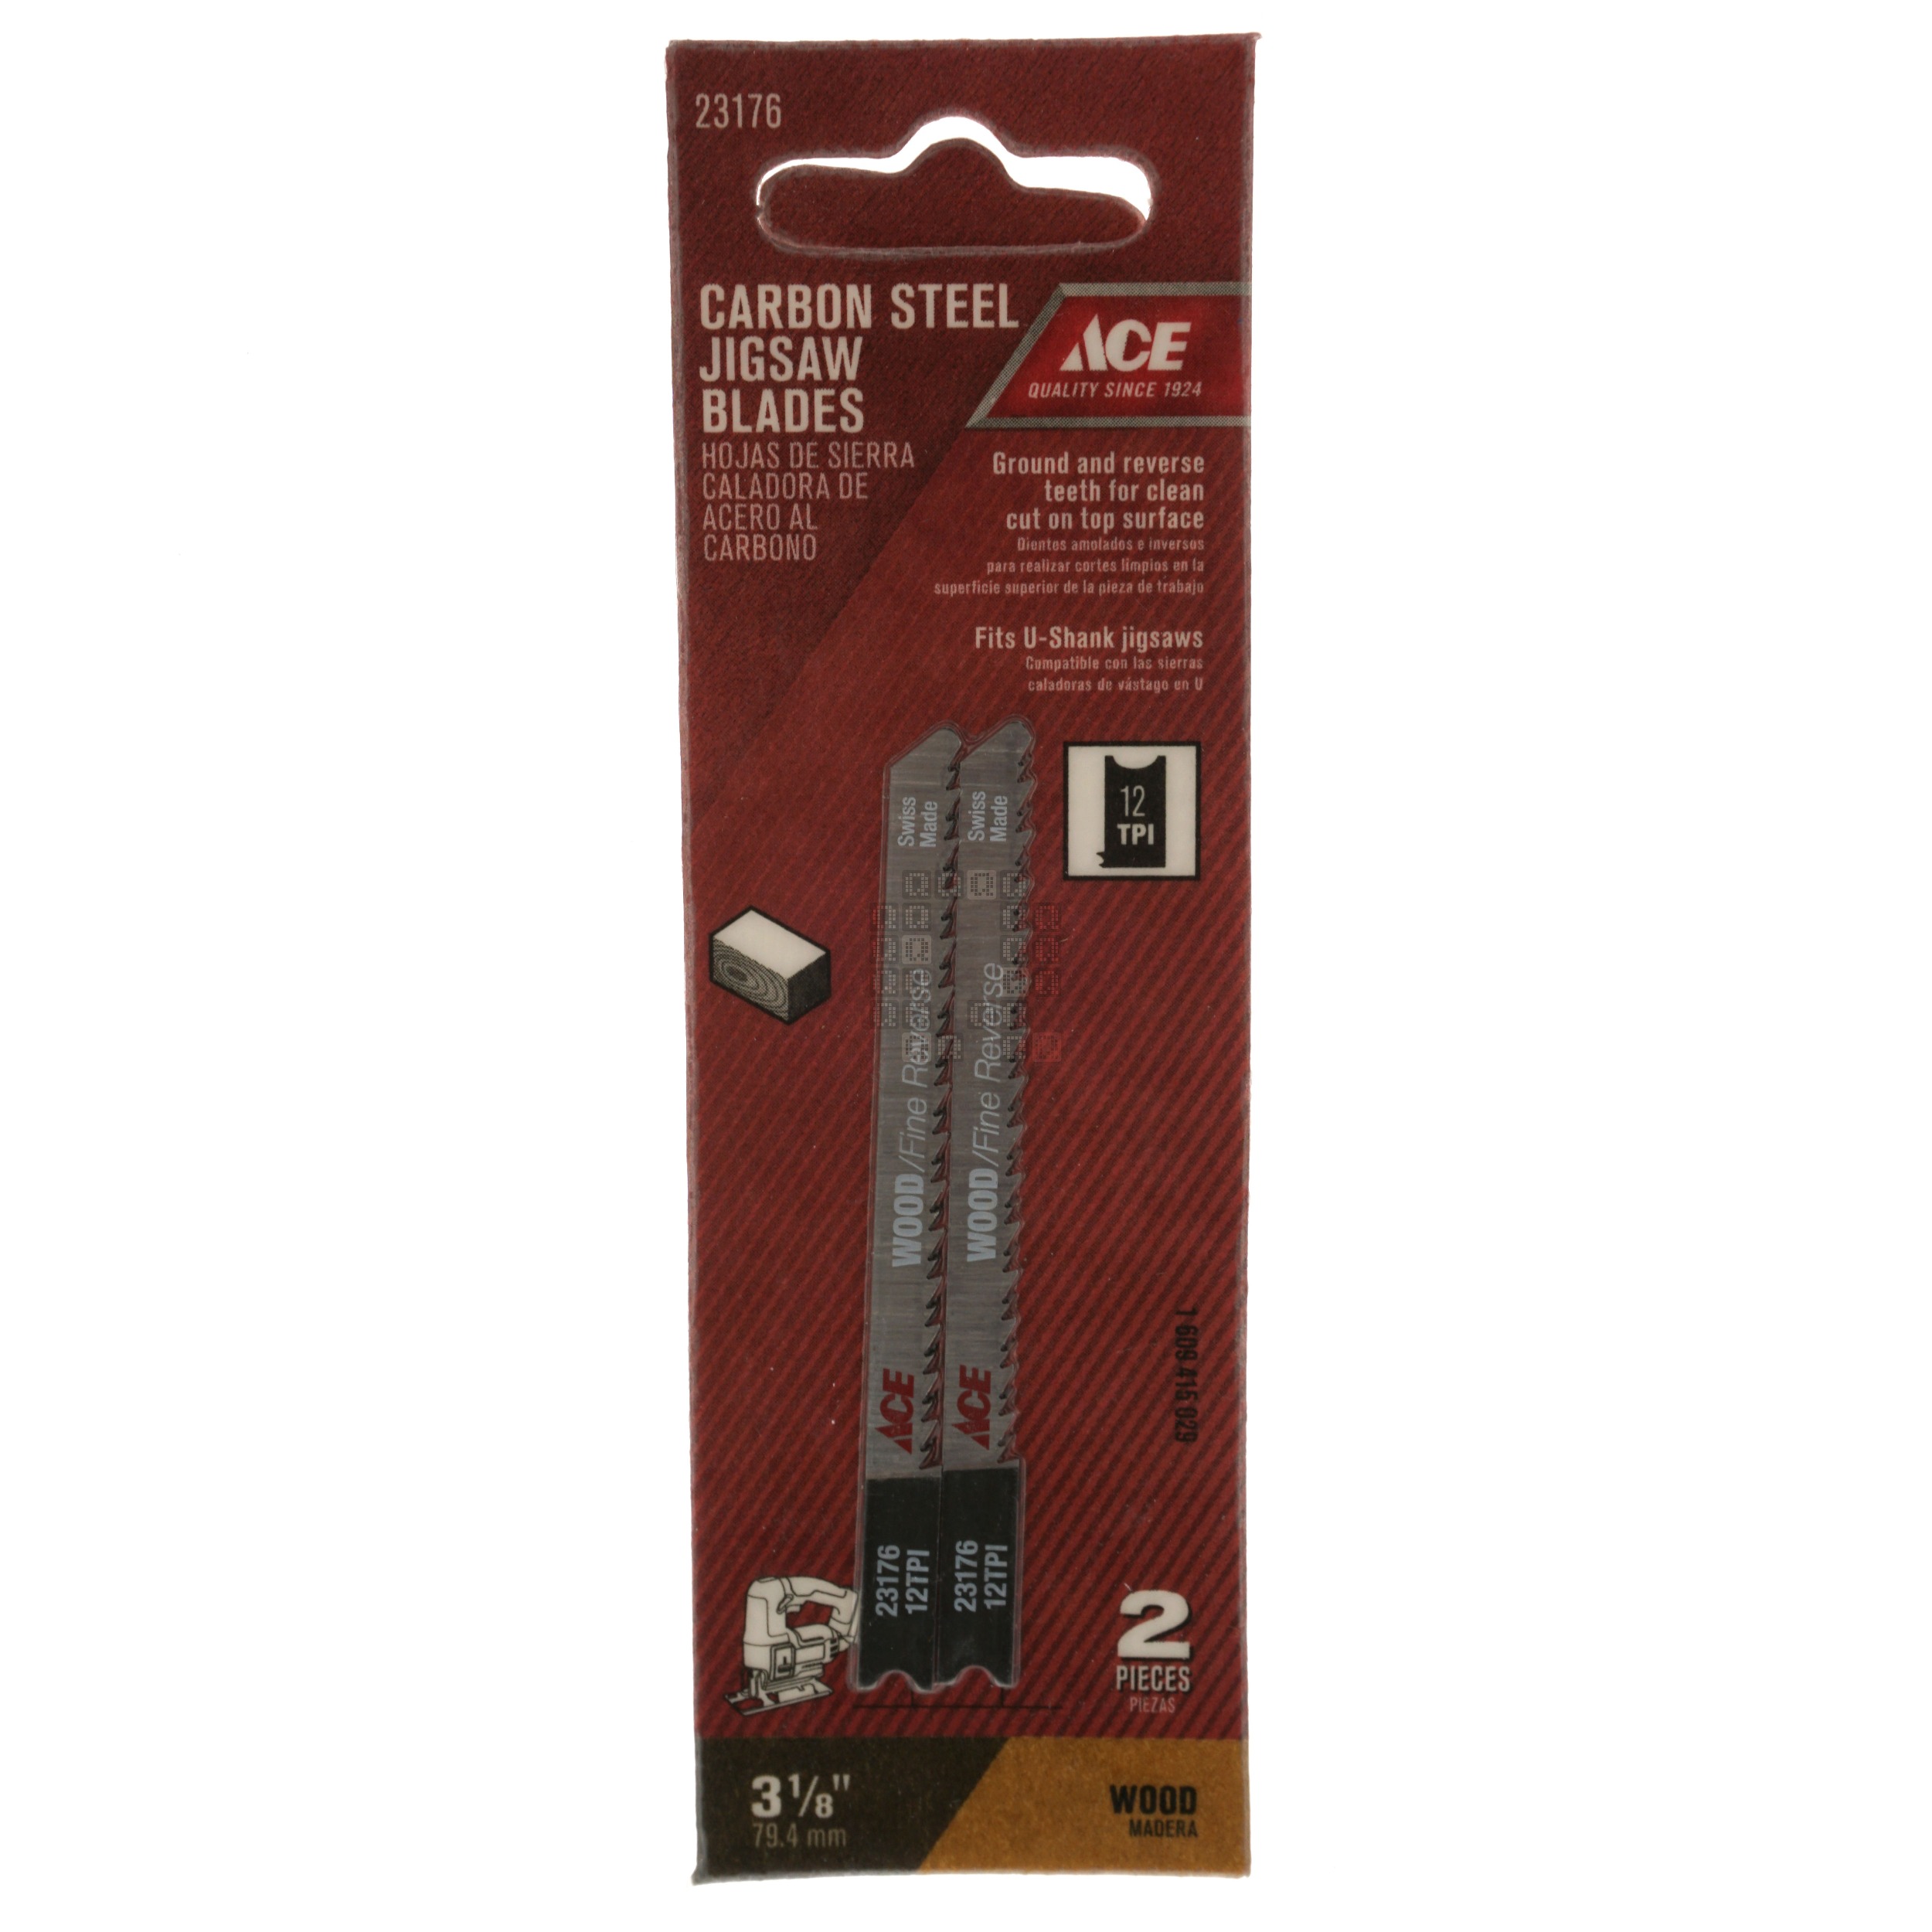 ACE Hardware 23176 Carbon Steel Jigsaw Blades, 12TPI 3-1/8" Length, 2-Pack